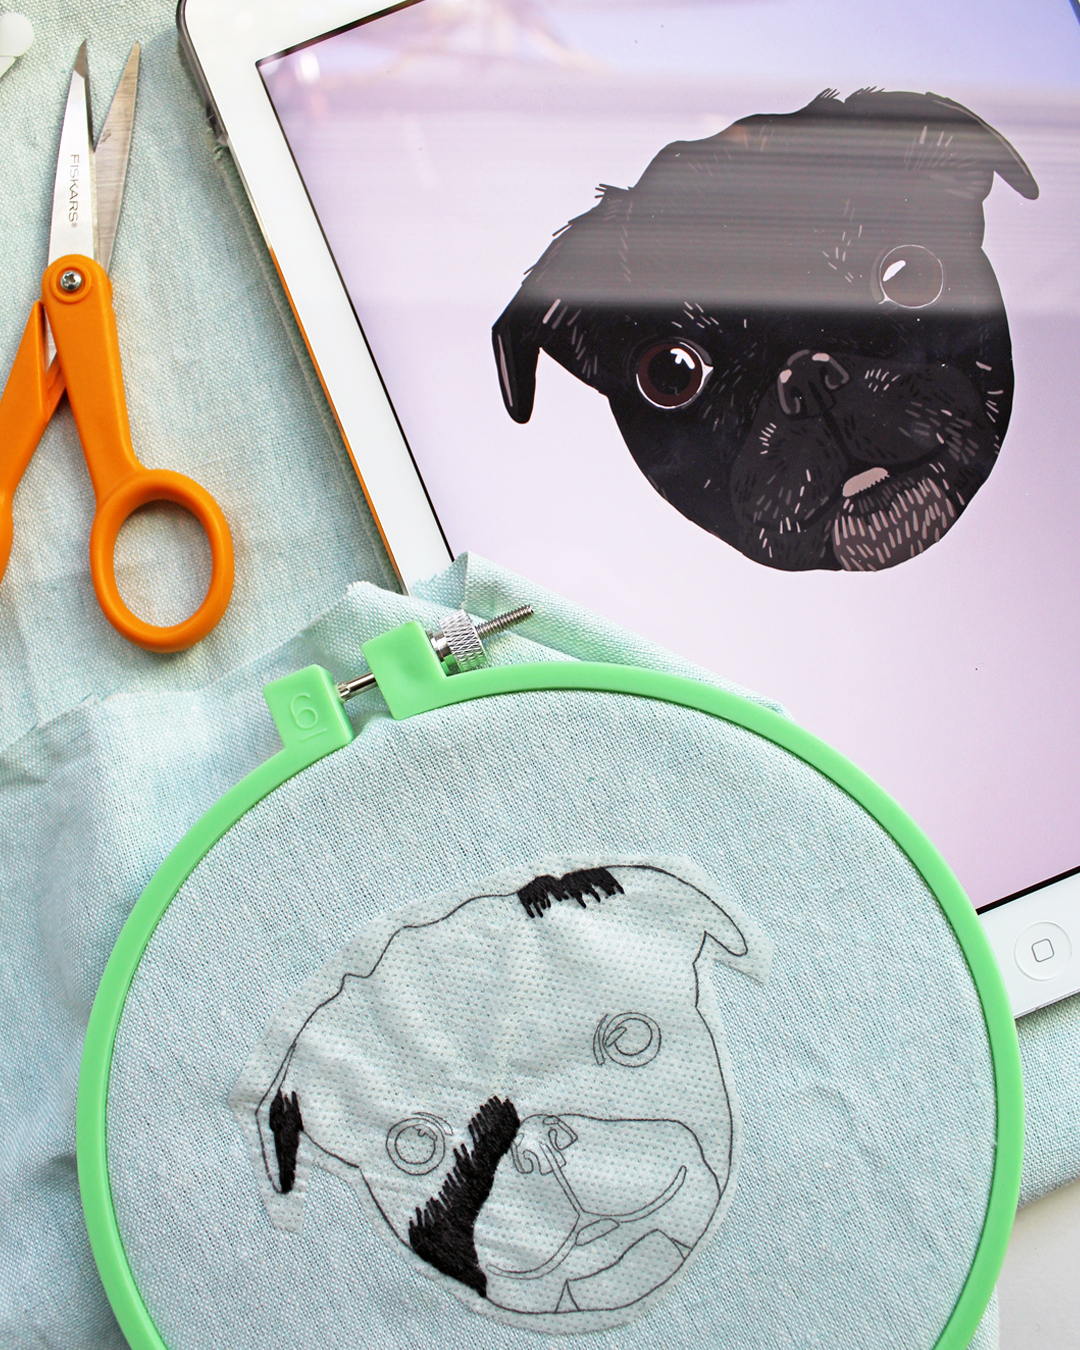 Embroidery of a pug and a digital sketch of a pug on an iPad